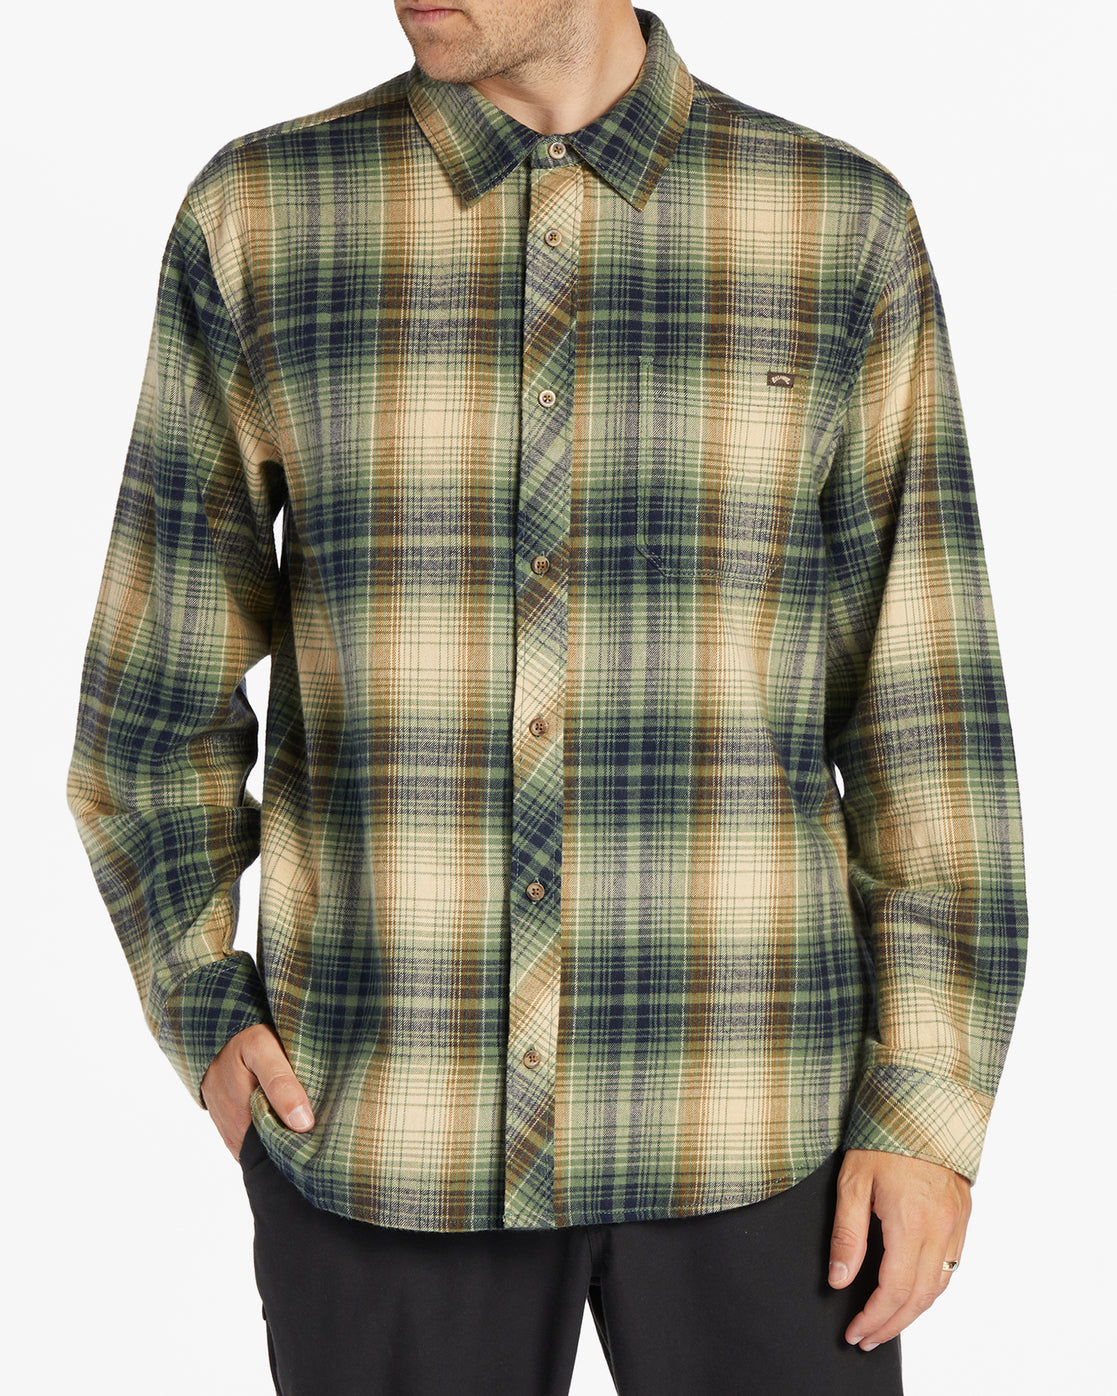 Coastline Flannel Long Sleeve Shirt - Sage